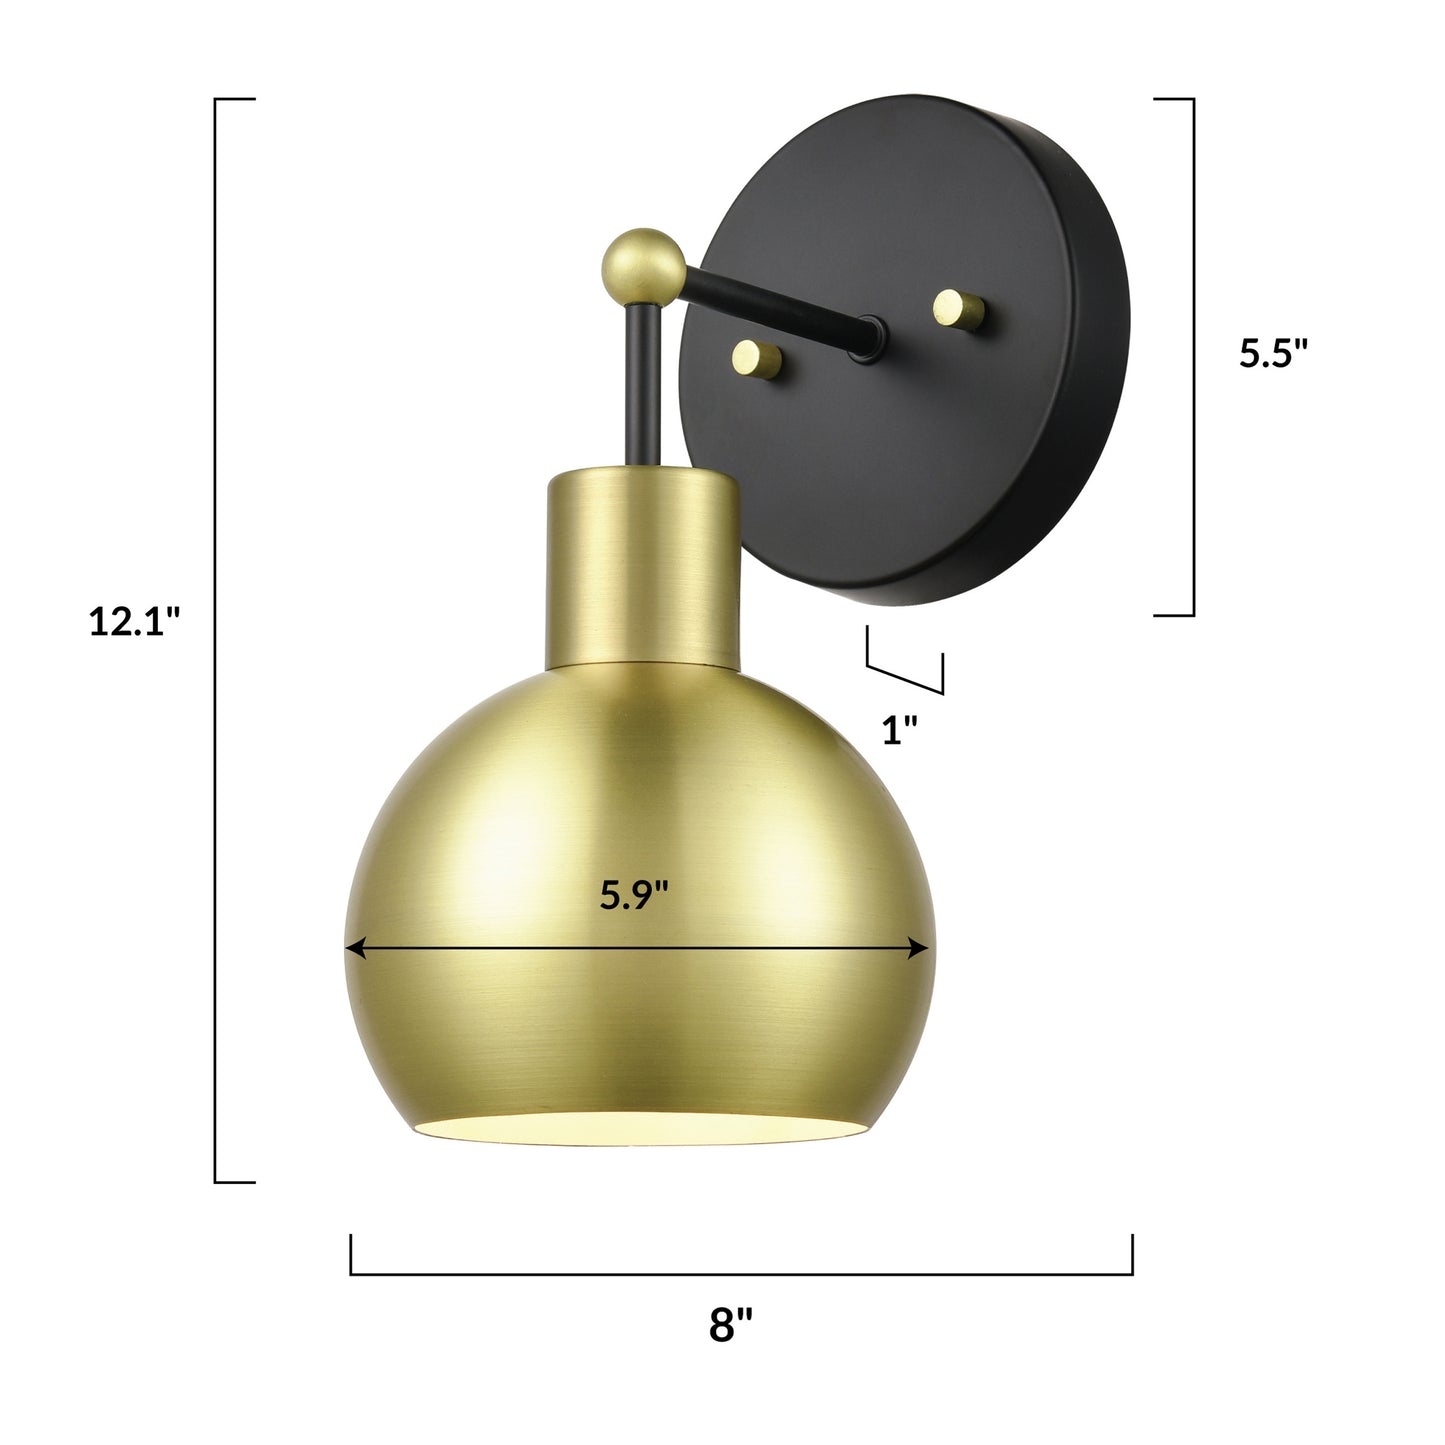 Black - Antique Brass, dimensions